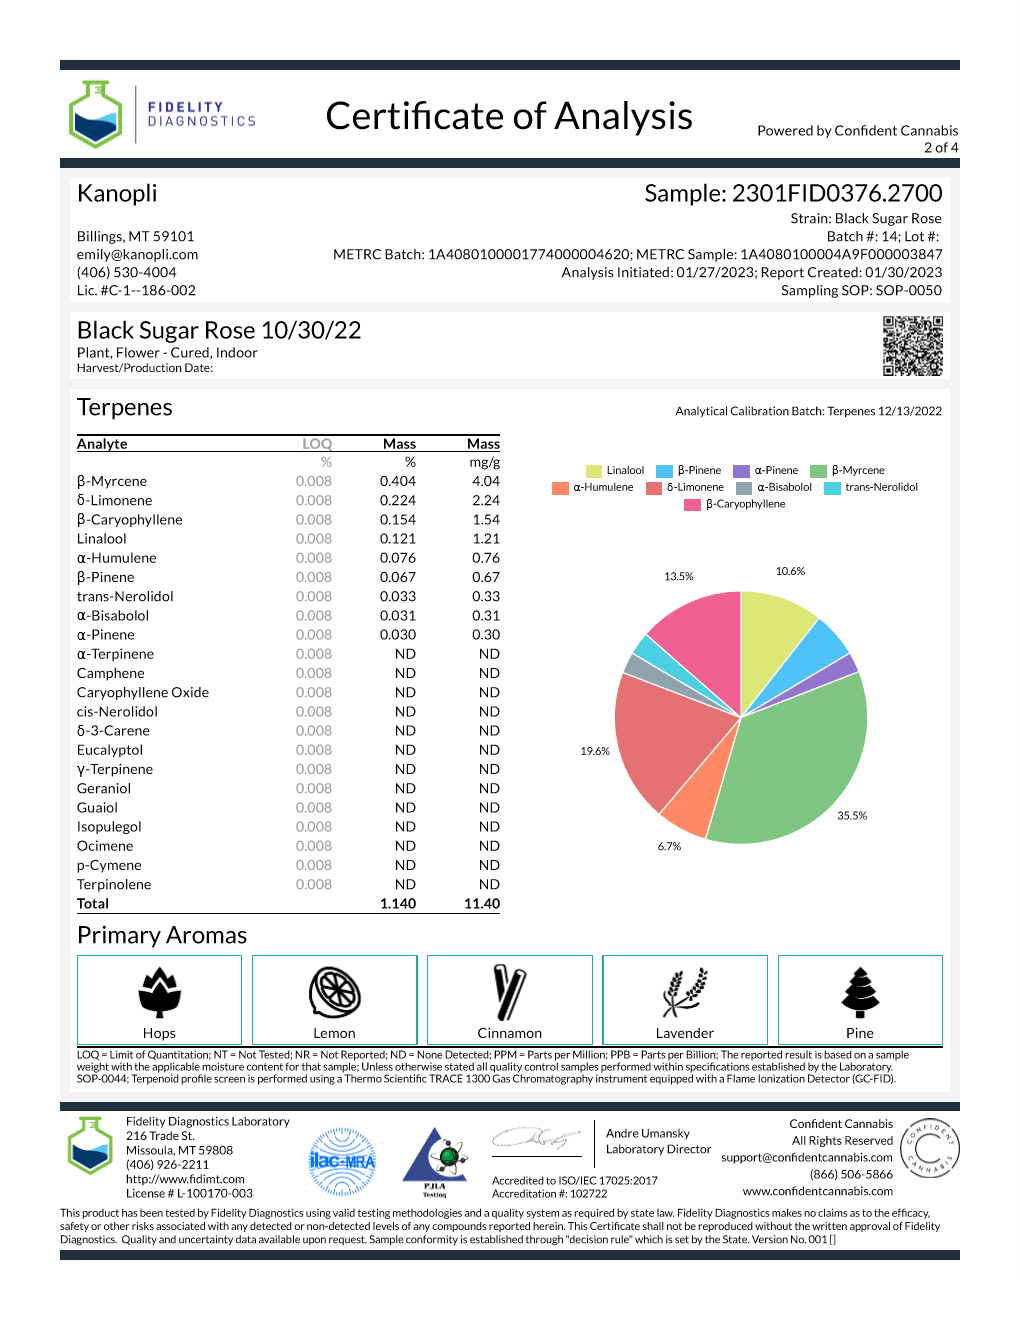 Black Sugar Rose - Indica 26.30% THC (Oct. 2022) shorties (2.5 grams)